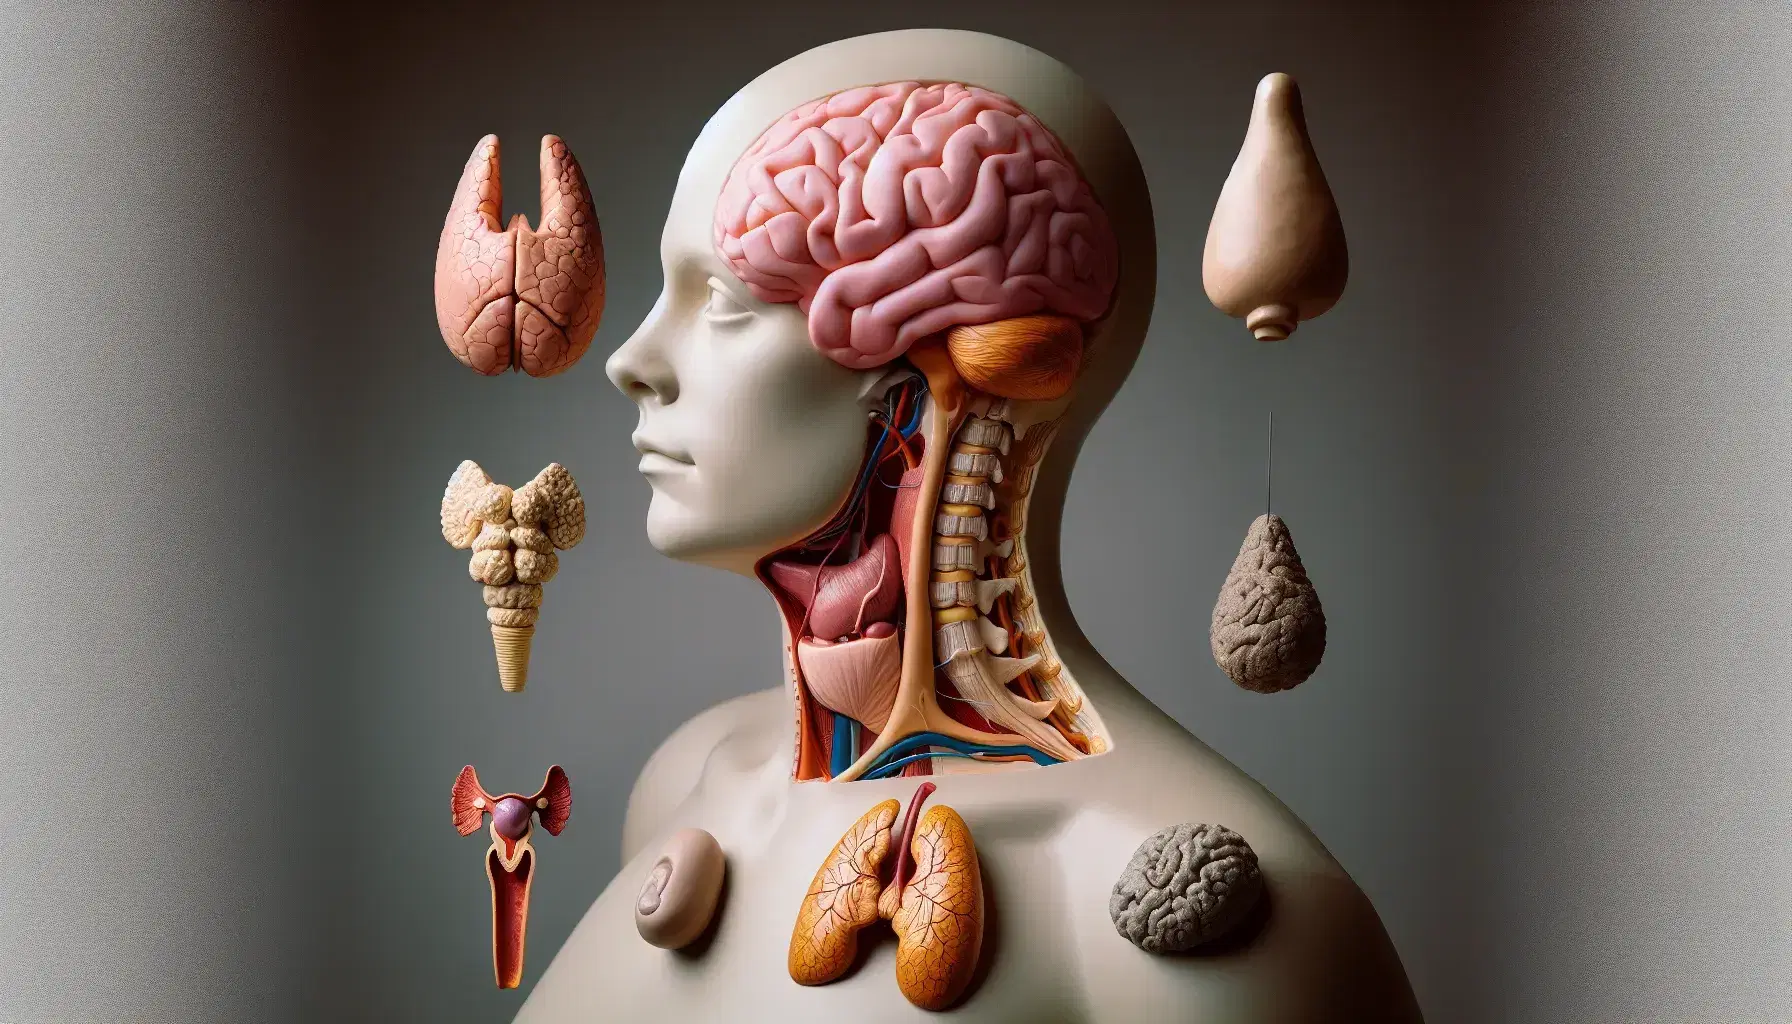 Modelo anatómico detallado de las glándulas endocrinas humanas, incluyendo cerebro con hipotálamo, hipófisis roja, glándula pineal azulada, tiroides rojiza y páncreas beige.